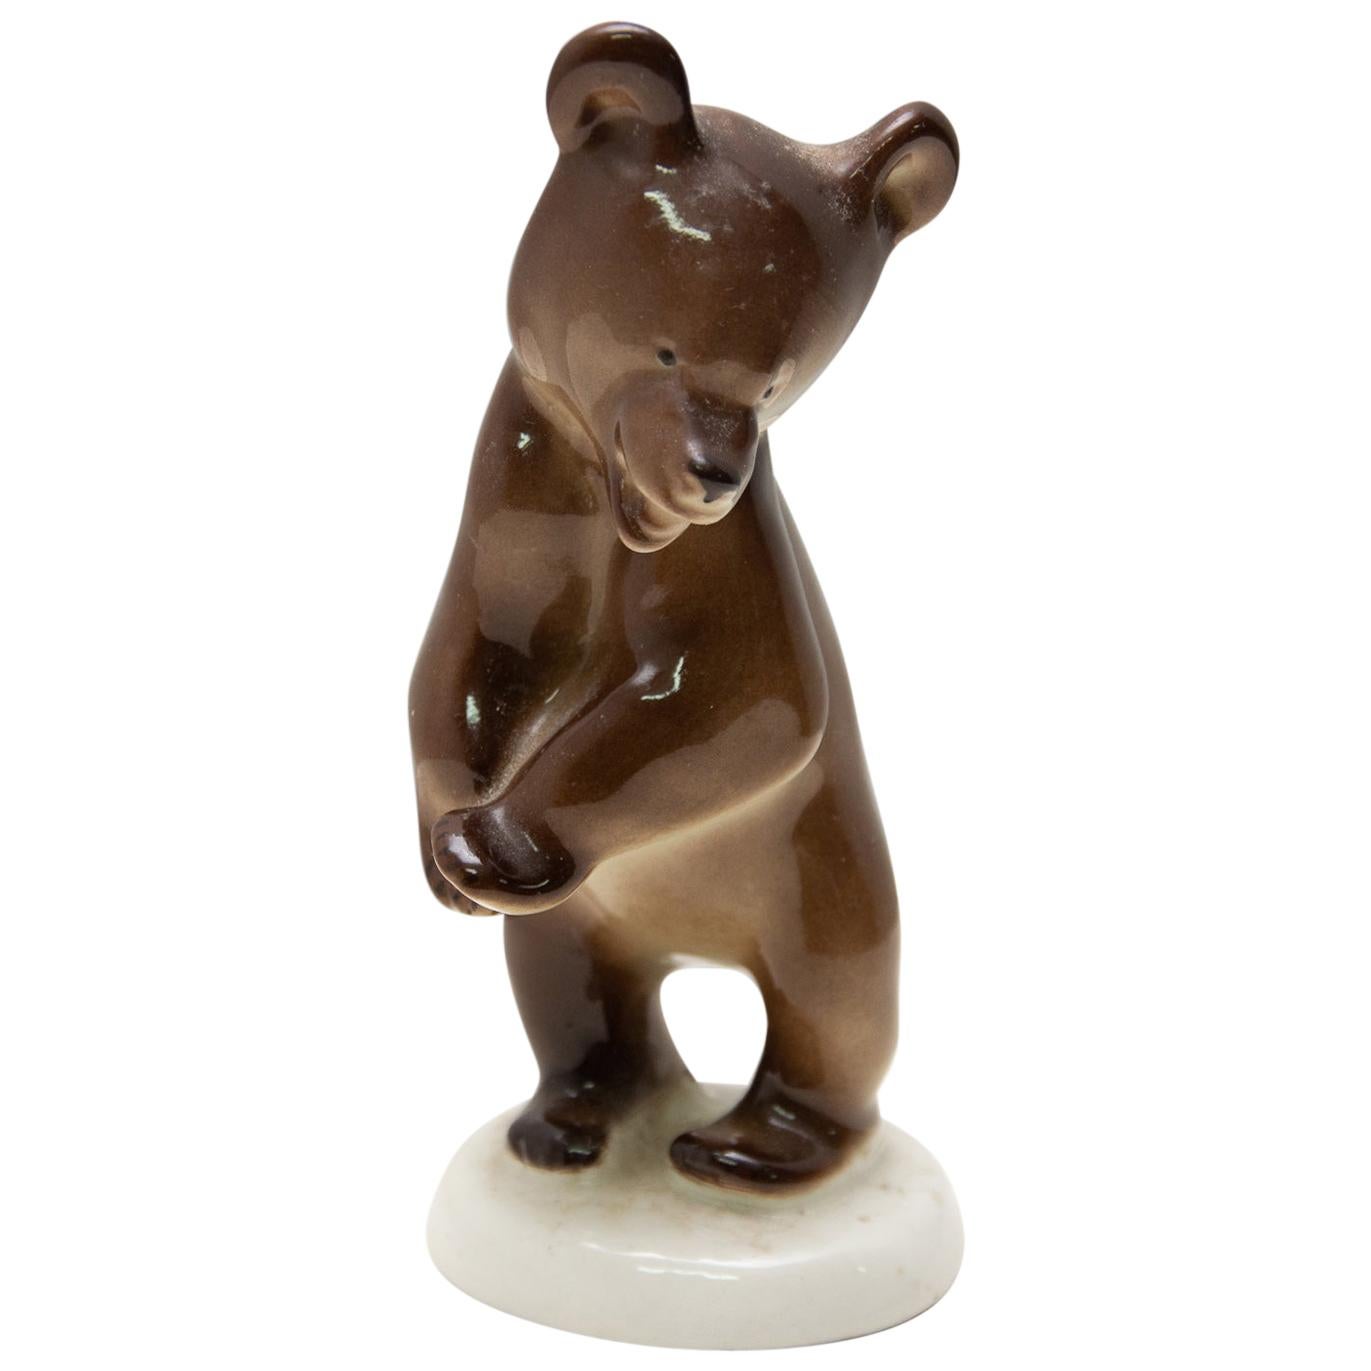 Soviet Union Ceramic Sculpture of a Bear, 1970´s